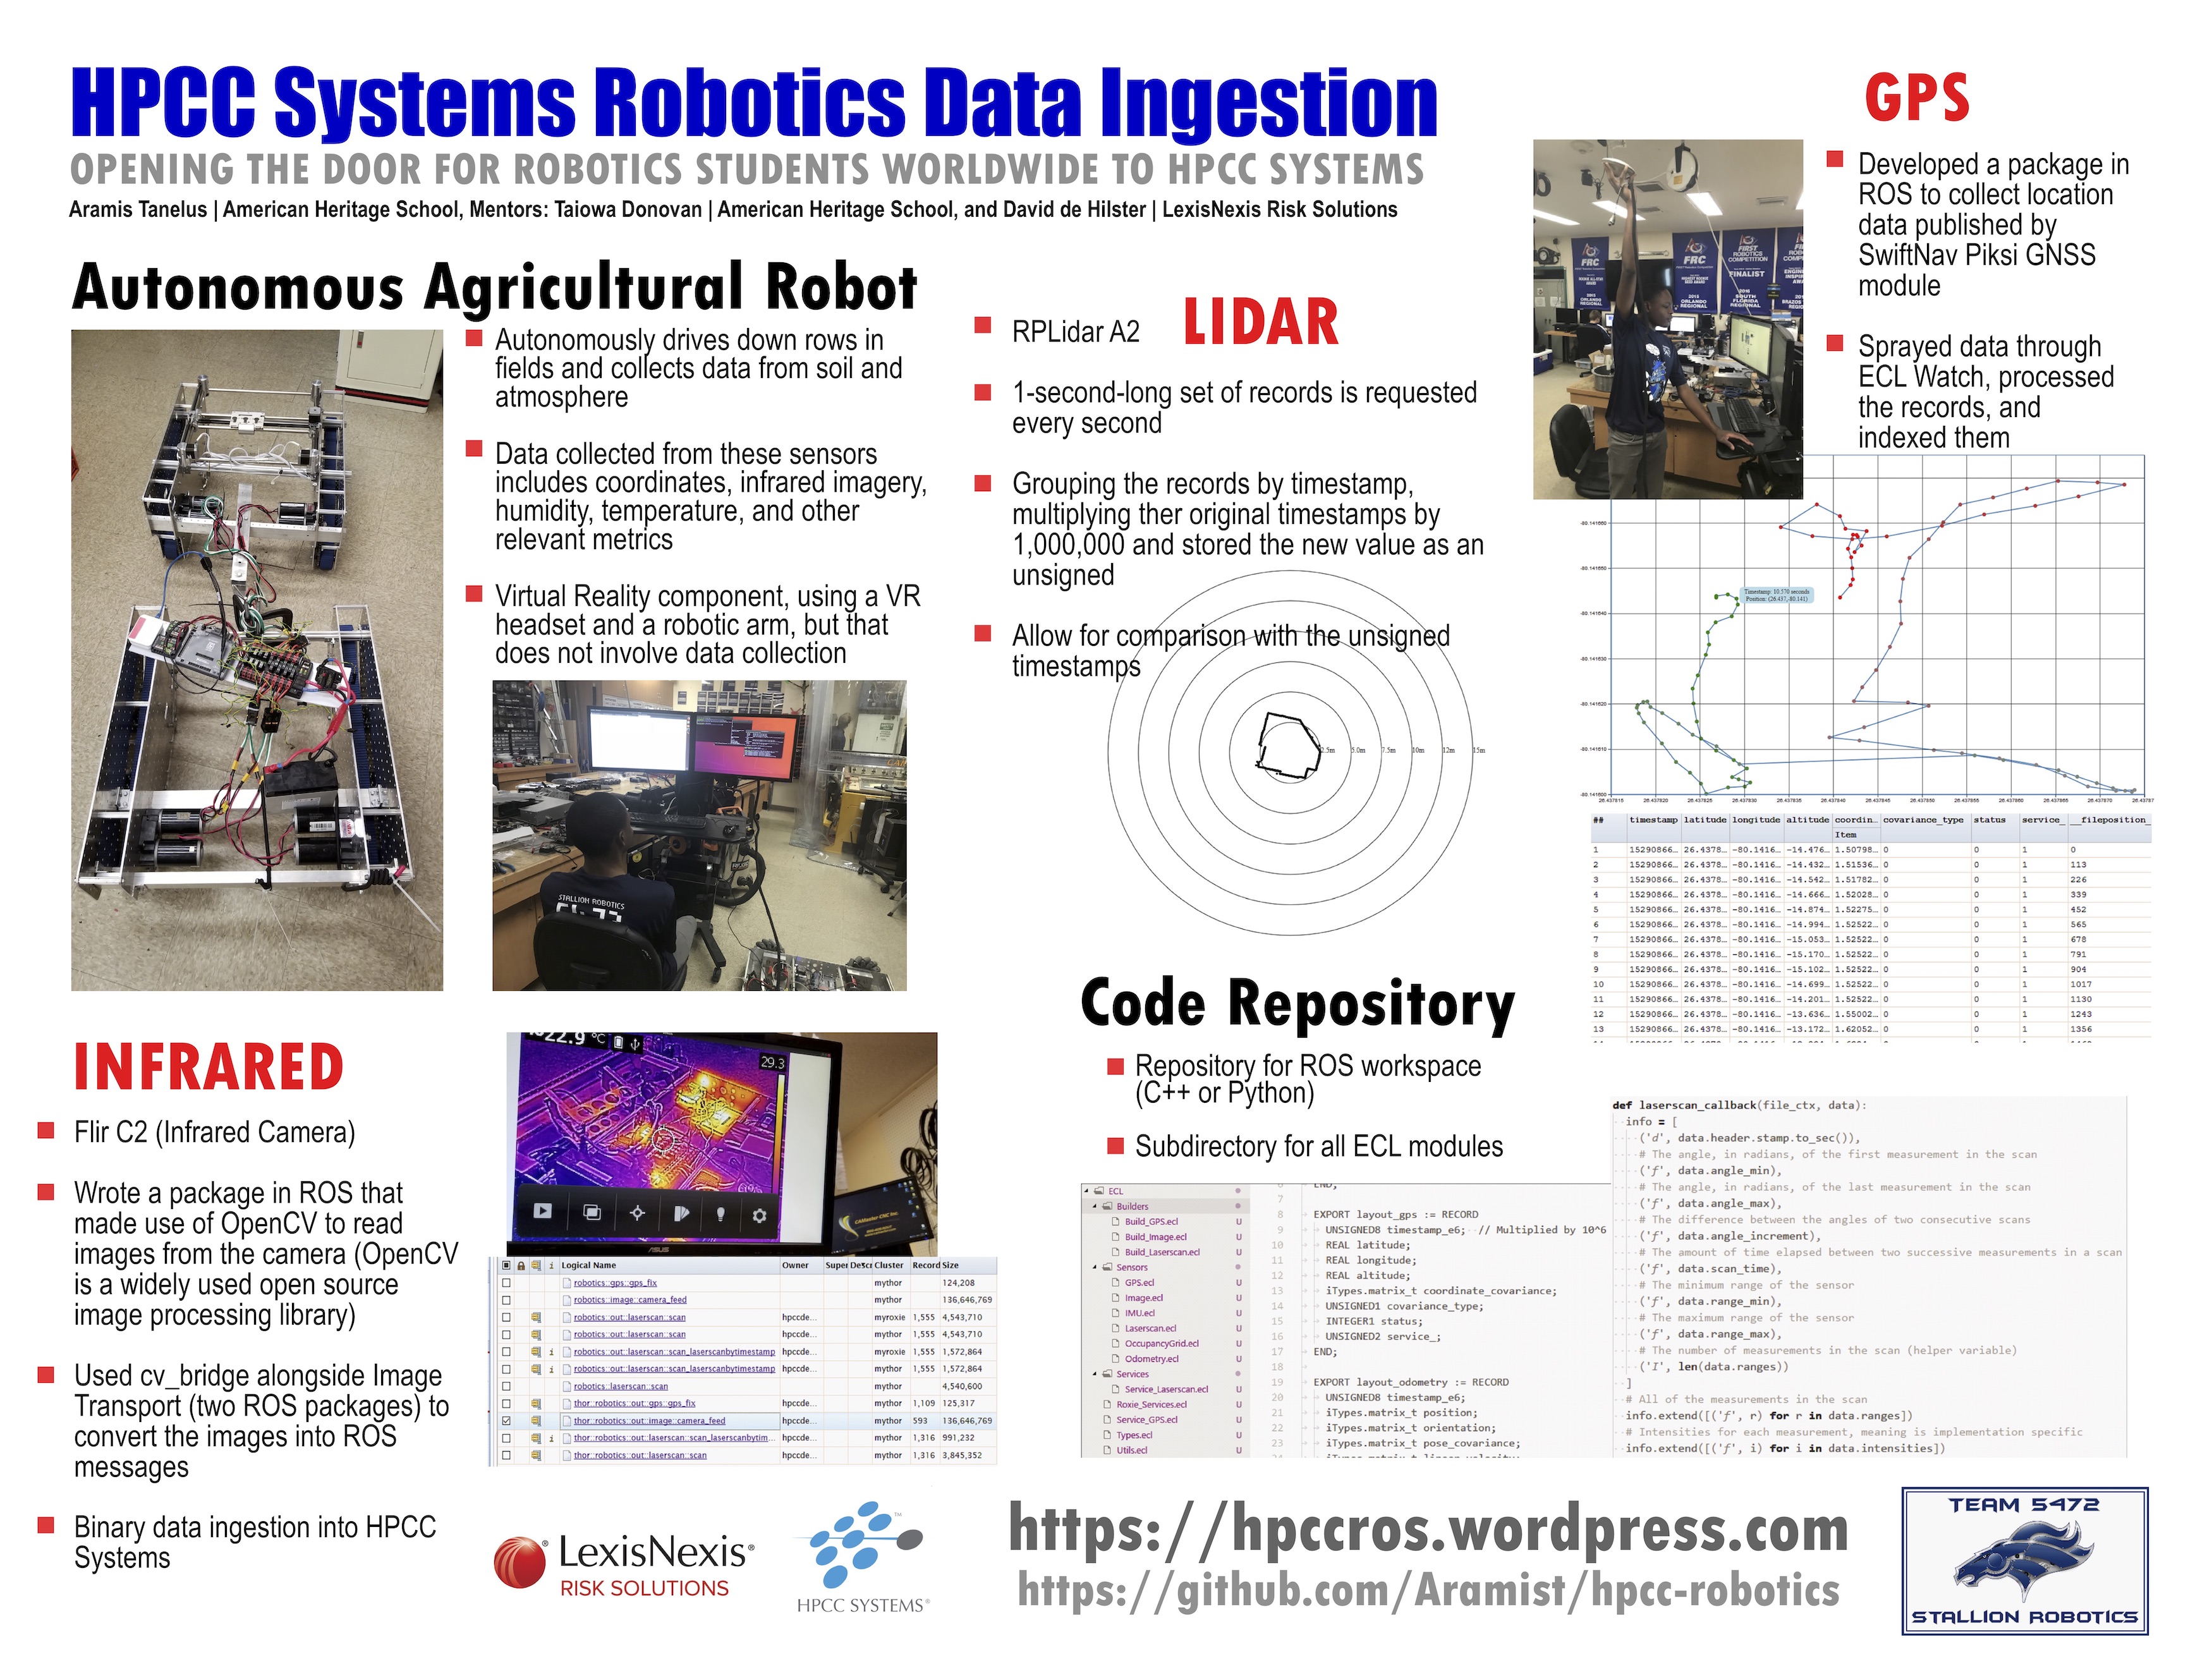 Aramis Tanelus - HPCC Systems Robotics Data Ingestion